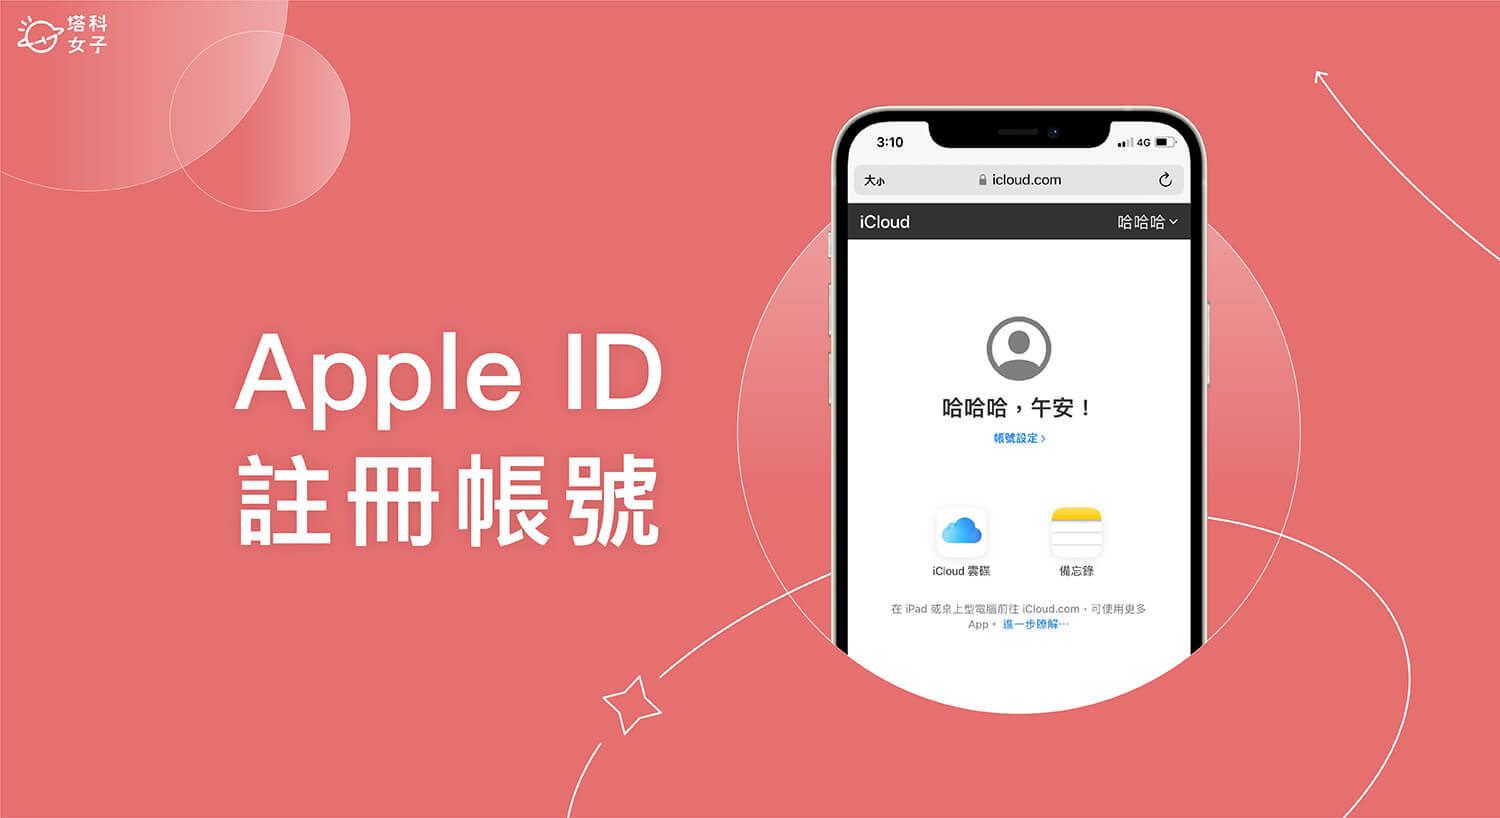 Apple ID 註冊教學，簡單 5 步驟快速申請 Apple ID 帳號